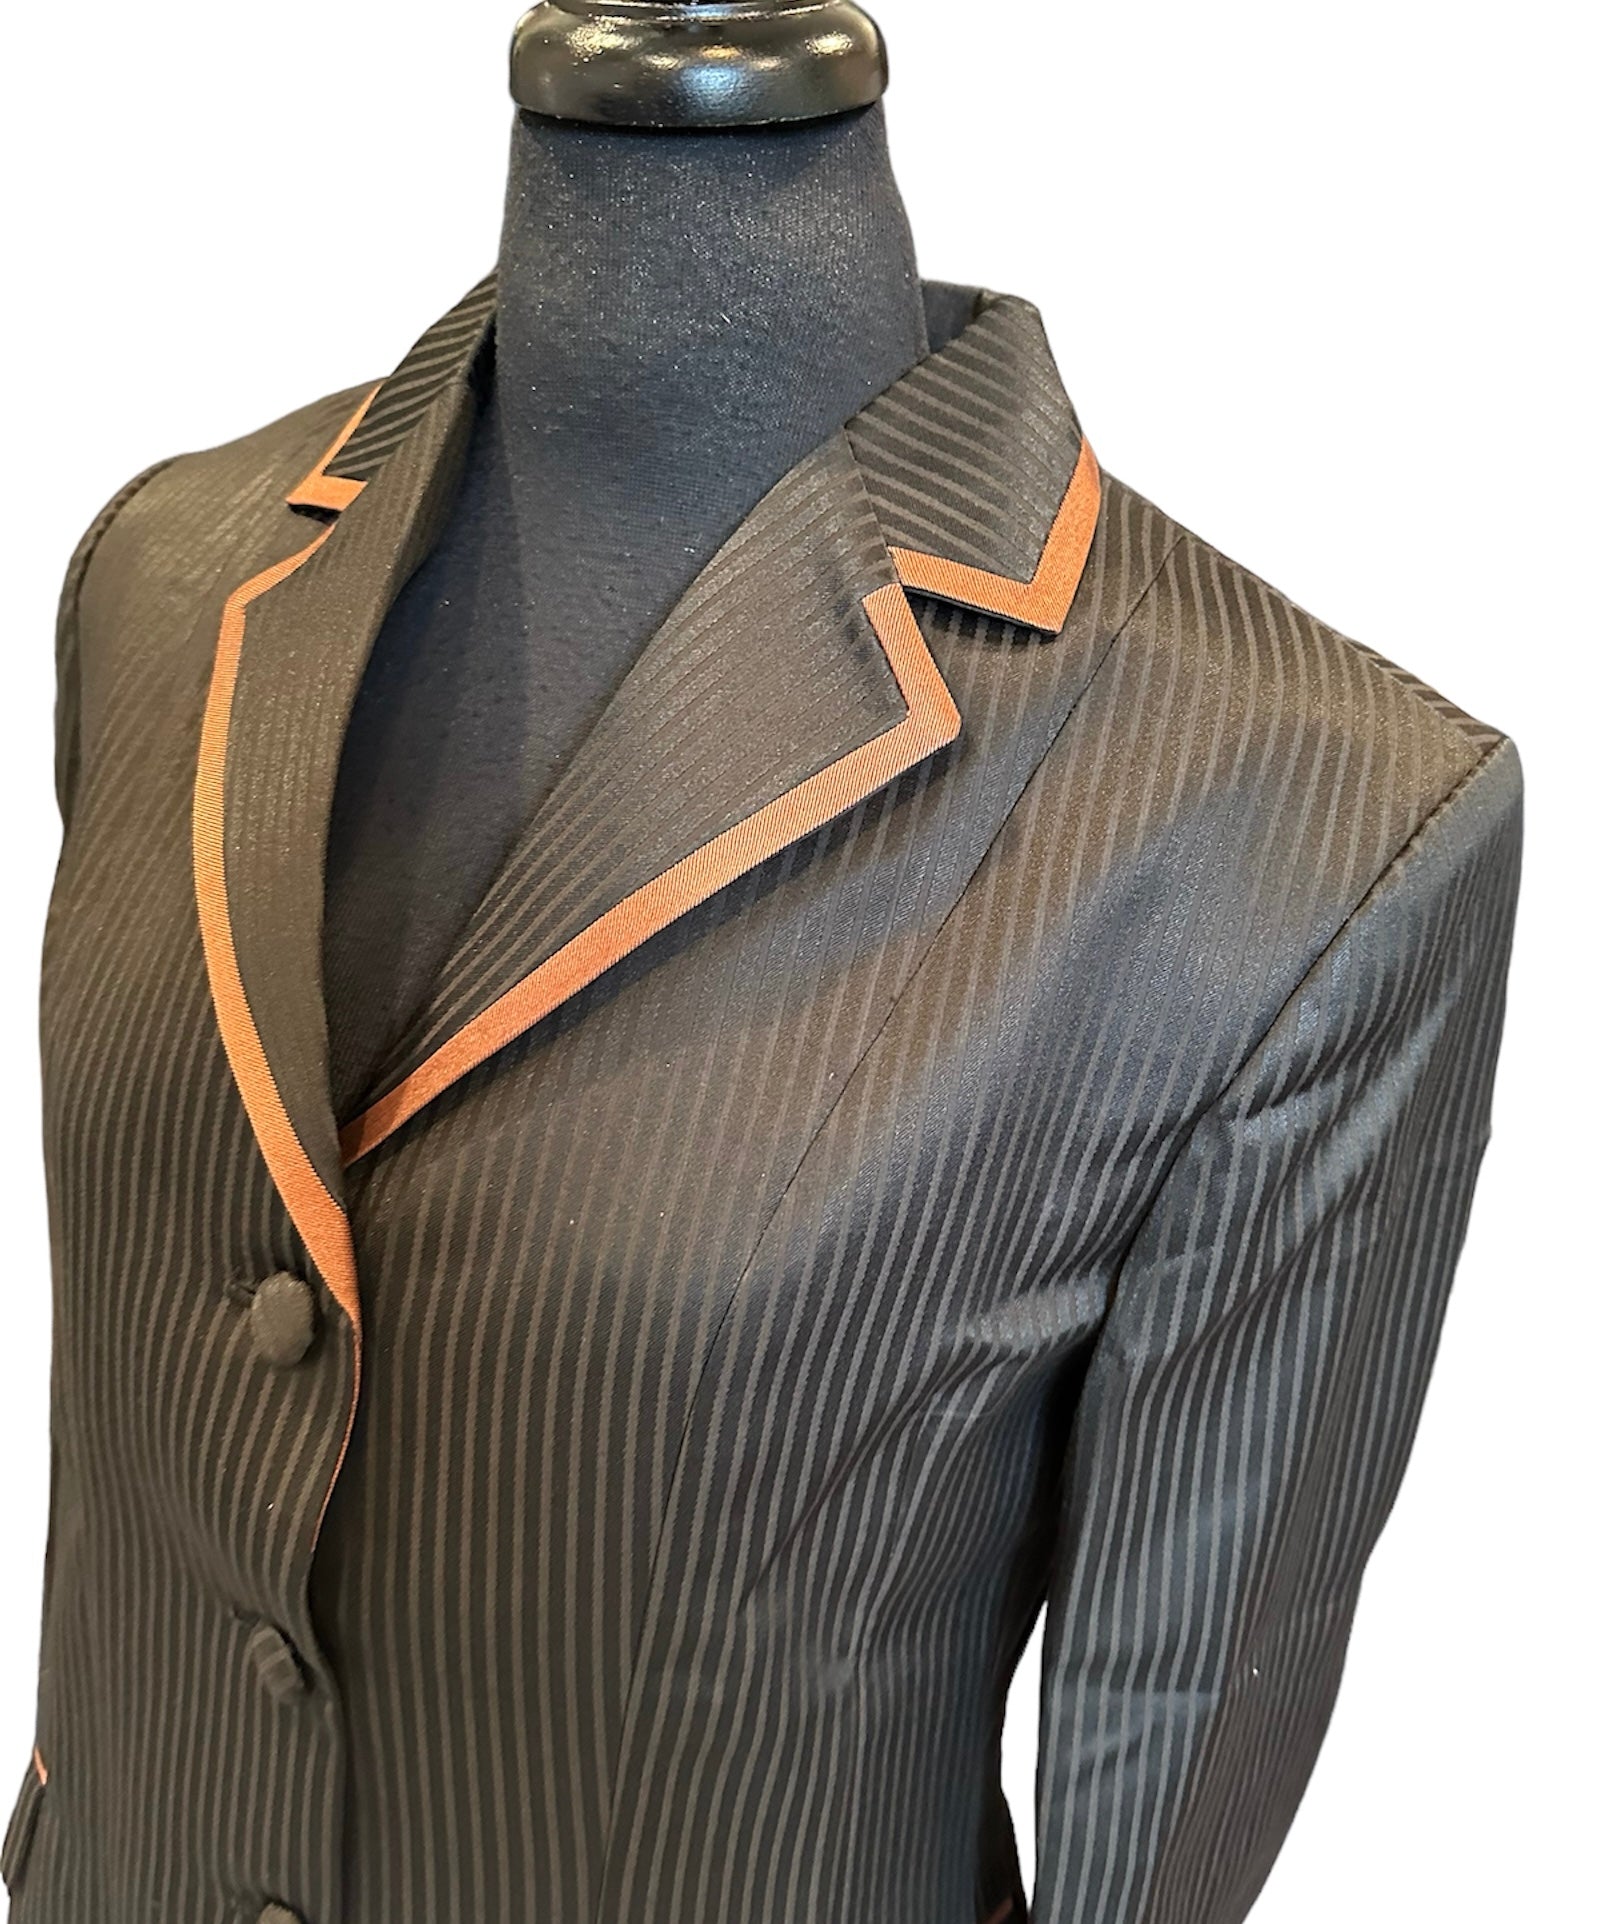 English Show Coat Black Self Stripe with Rust Fabric Code HR-0110